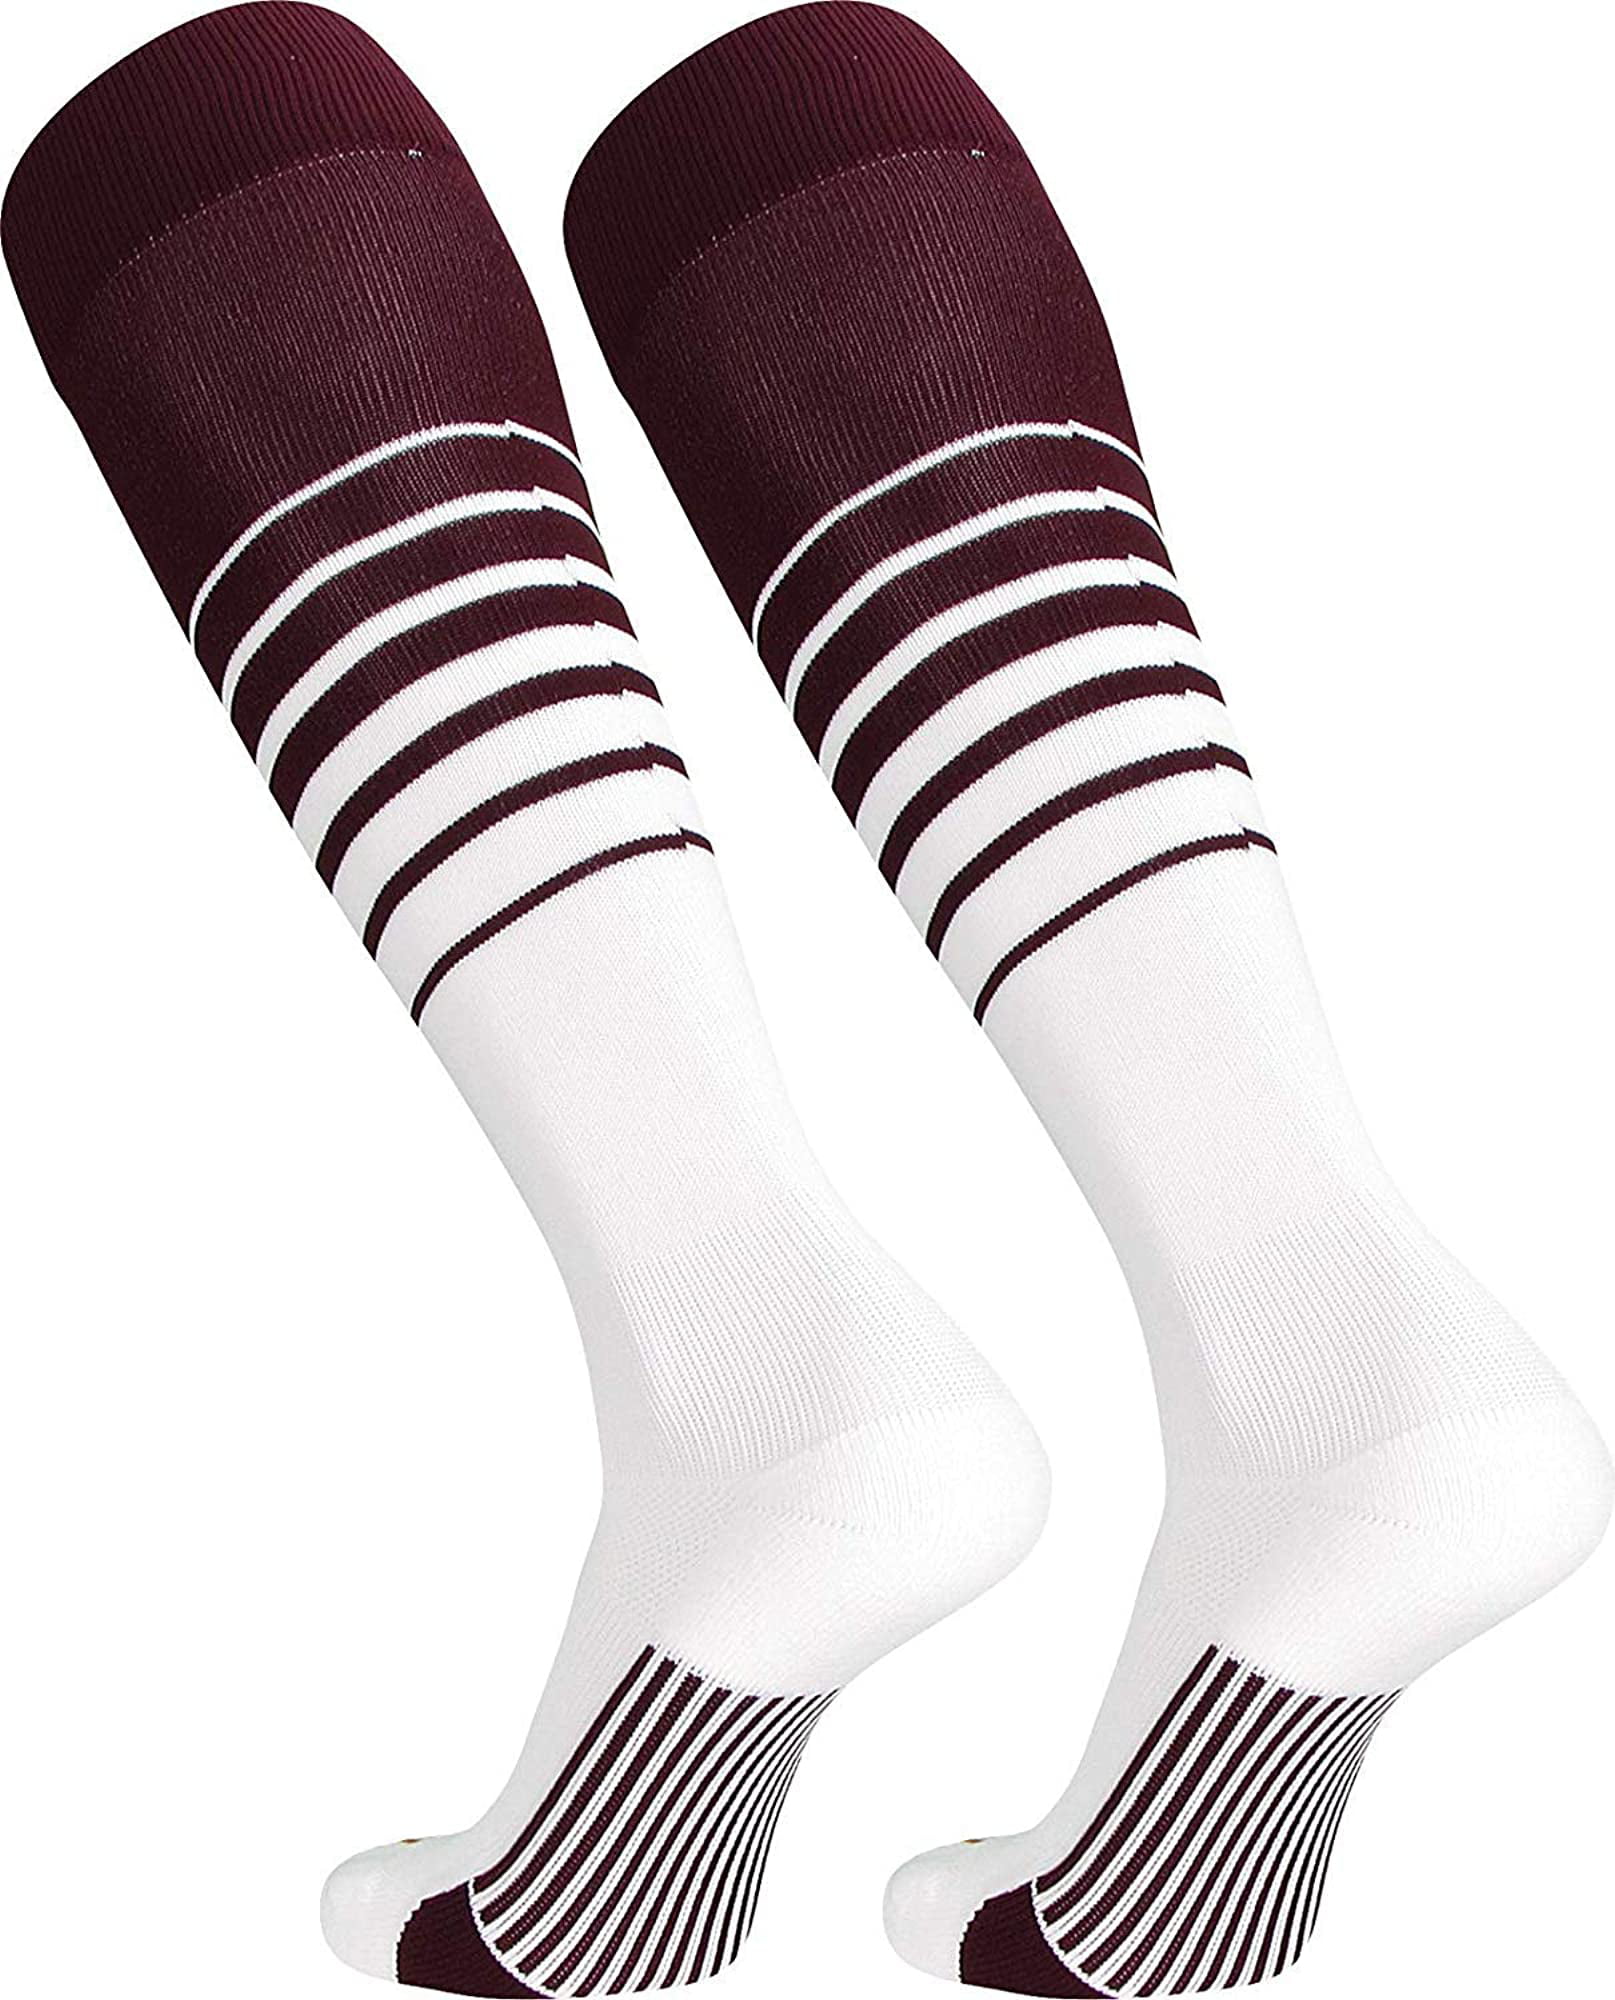 TCK Sports Elite Breaker Soccer Socks with Extra Cross-Stretch for Shin Guards Multiple Colors